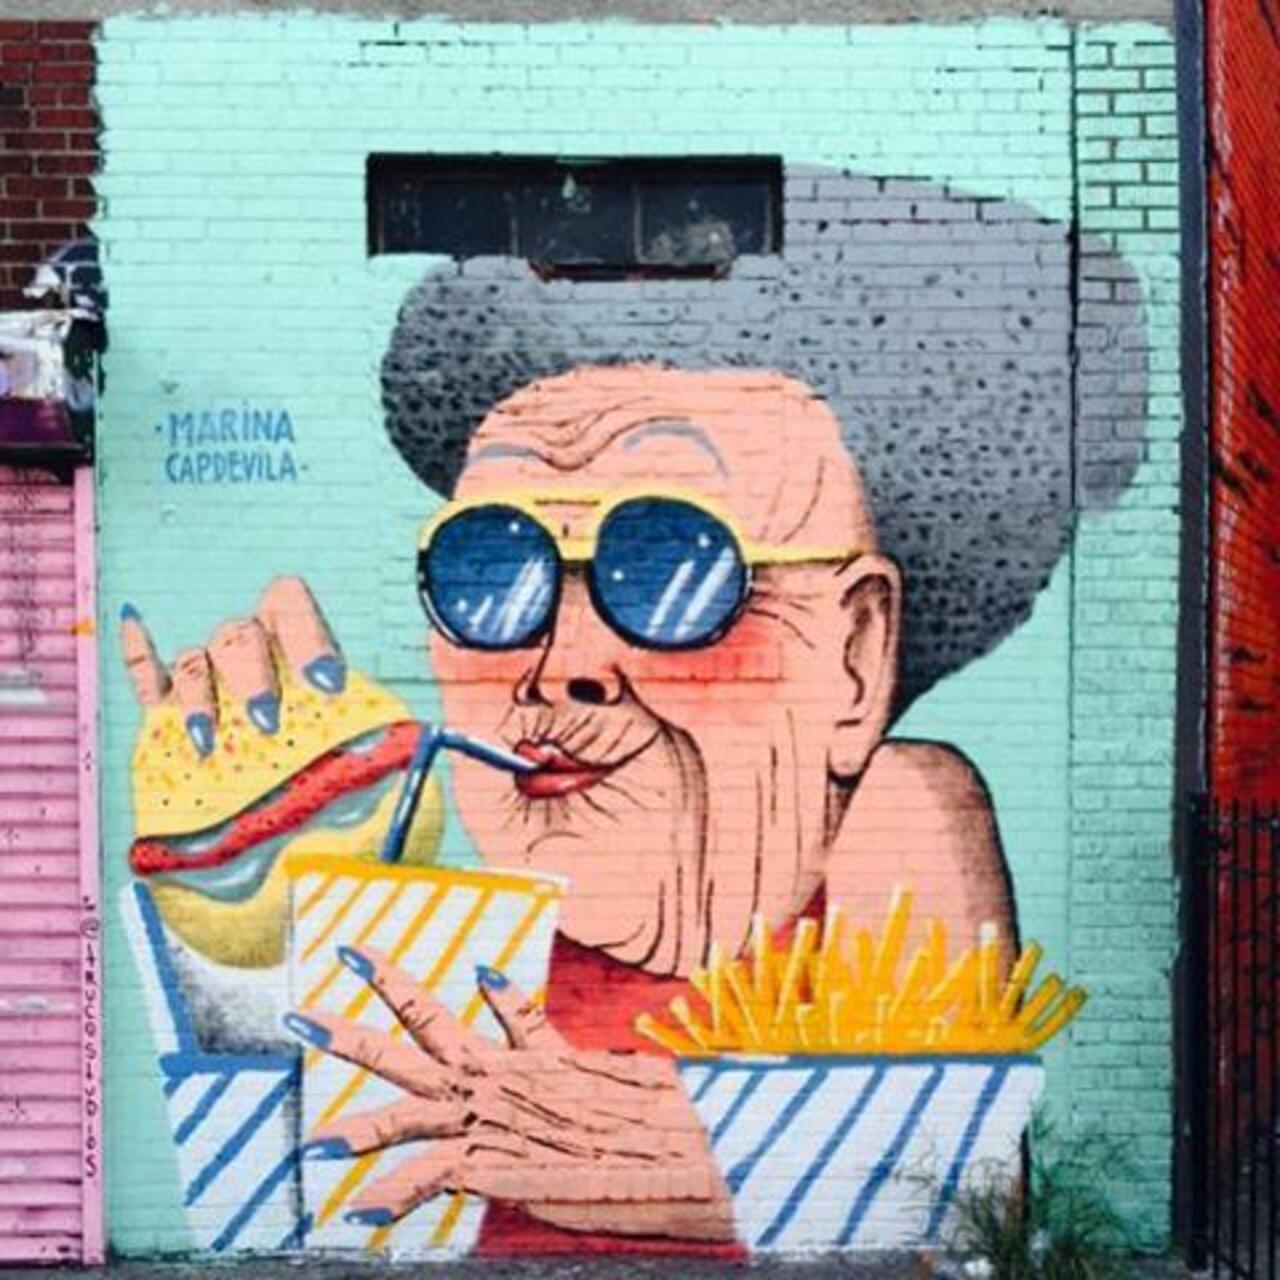 Marina #streetart #mural #painting #walls #graffiti #fumeroism #brooklyn #nyc #newyorkcity #nycstreetart #streetart… http://t.co/Utm26qMod4